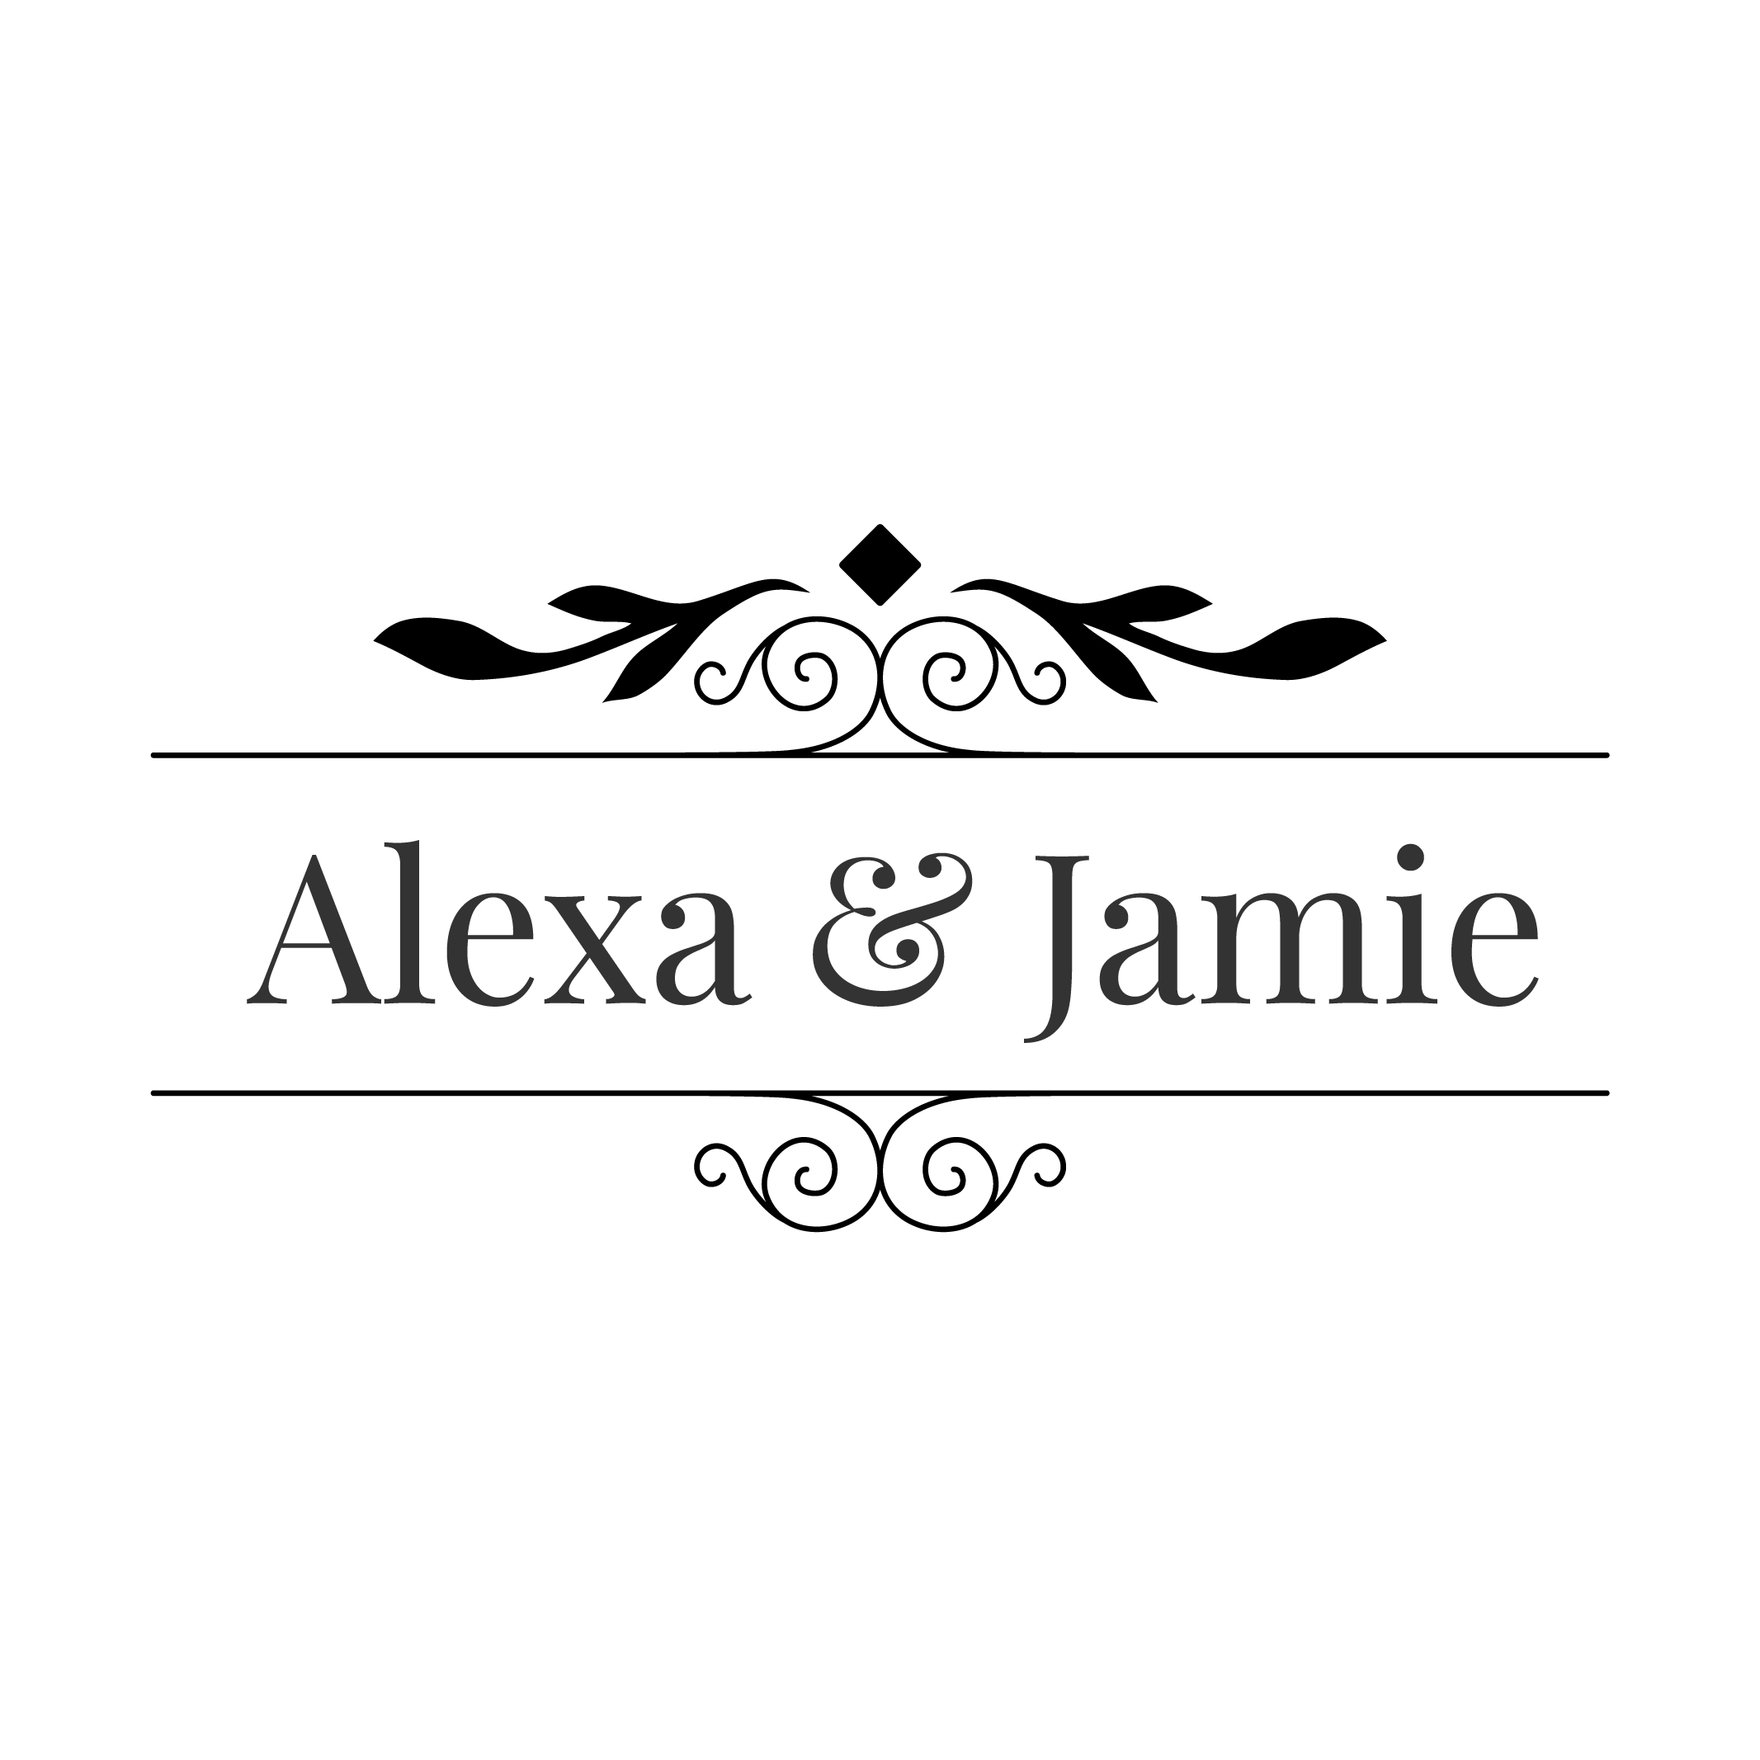 Wedding Name Silhouette in Illustrator, EPS, SVG, JPG, PNG